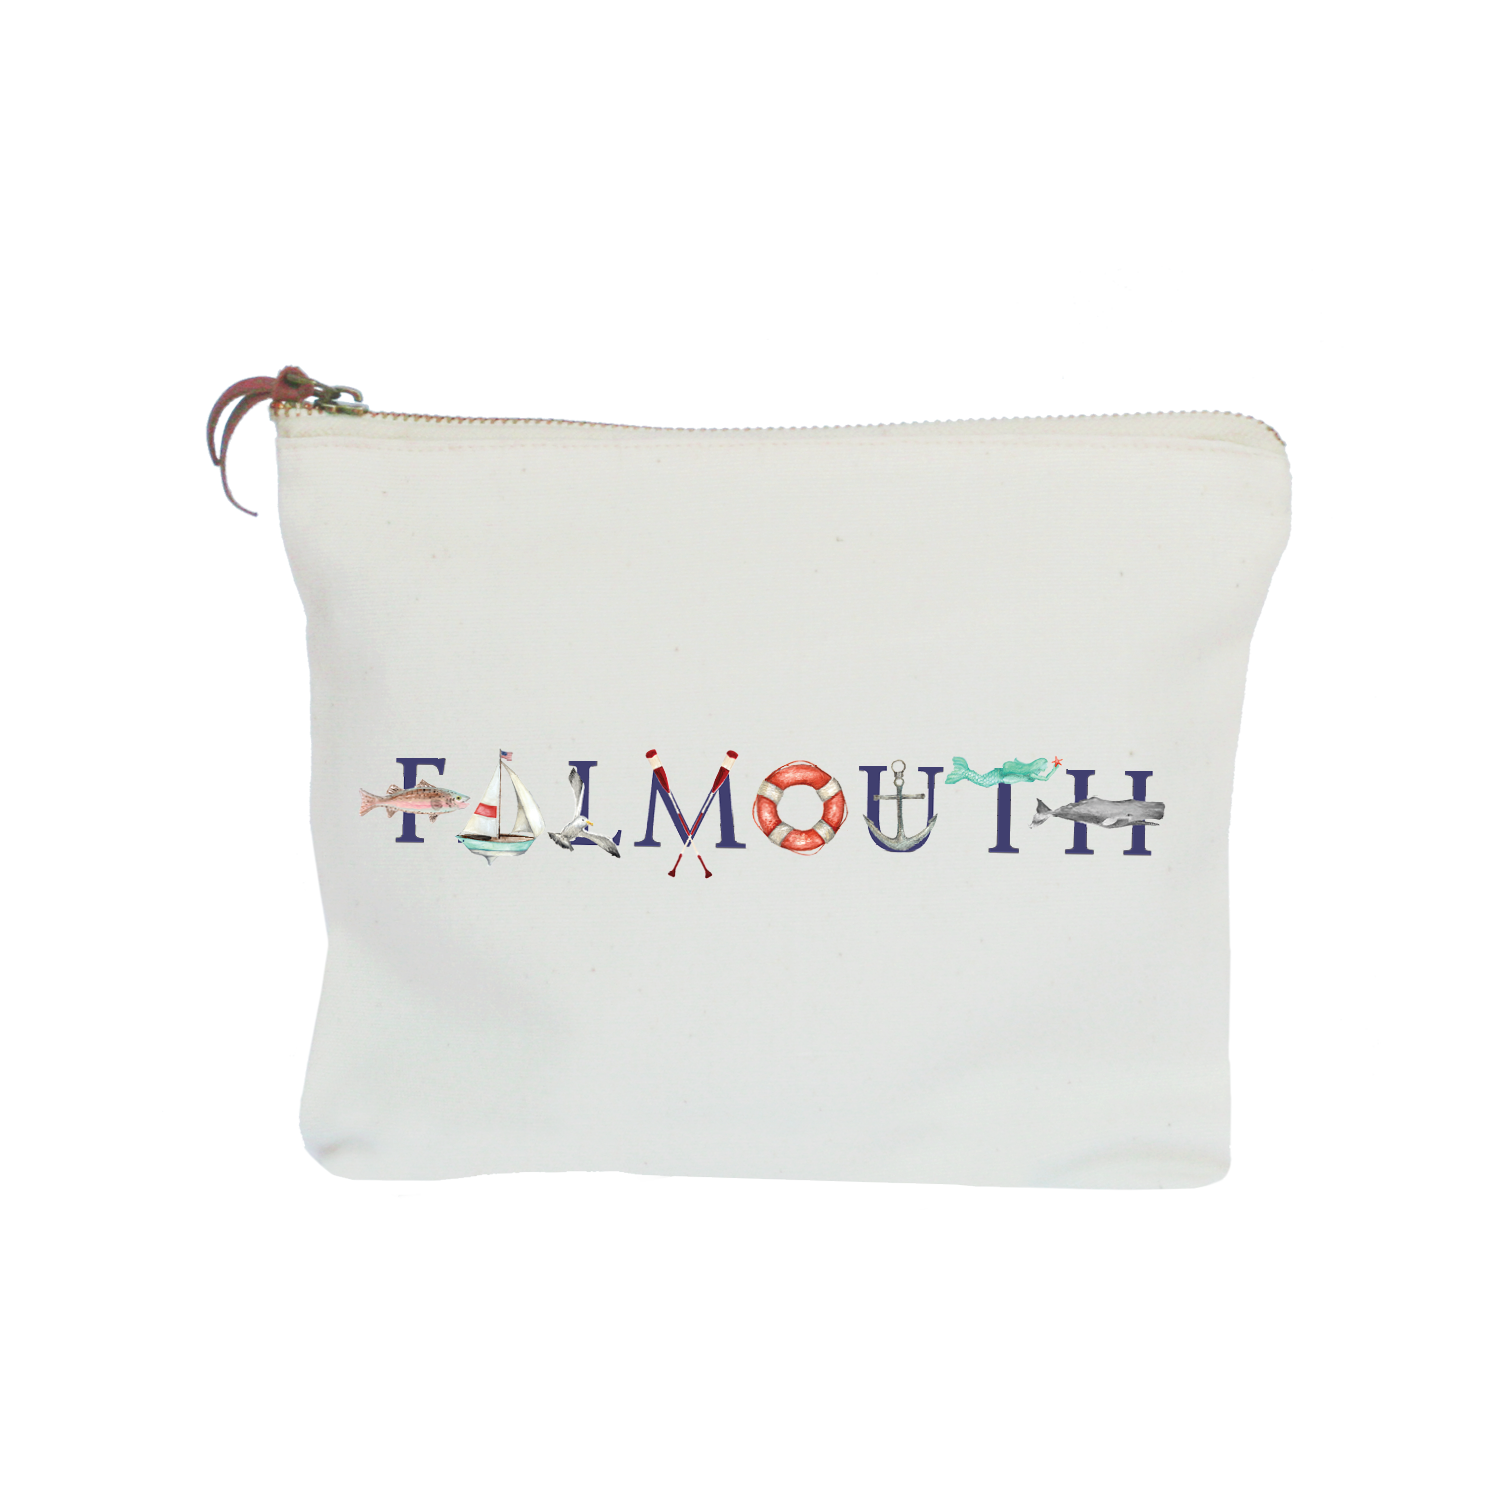 Falmouth zipper pouch